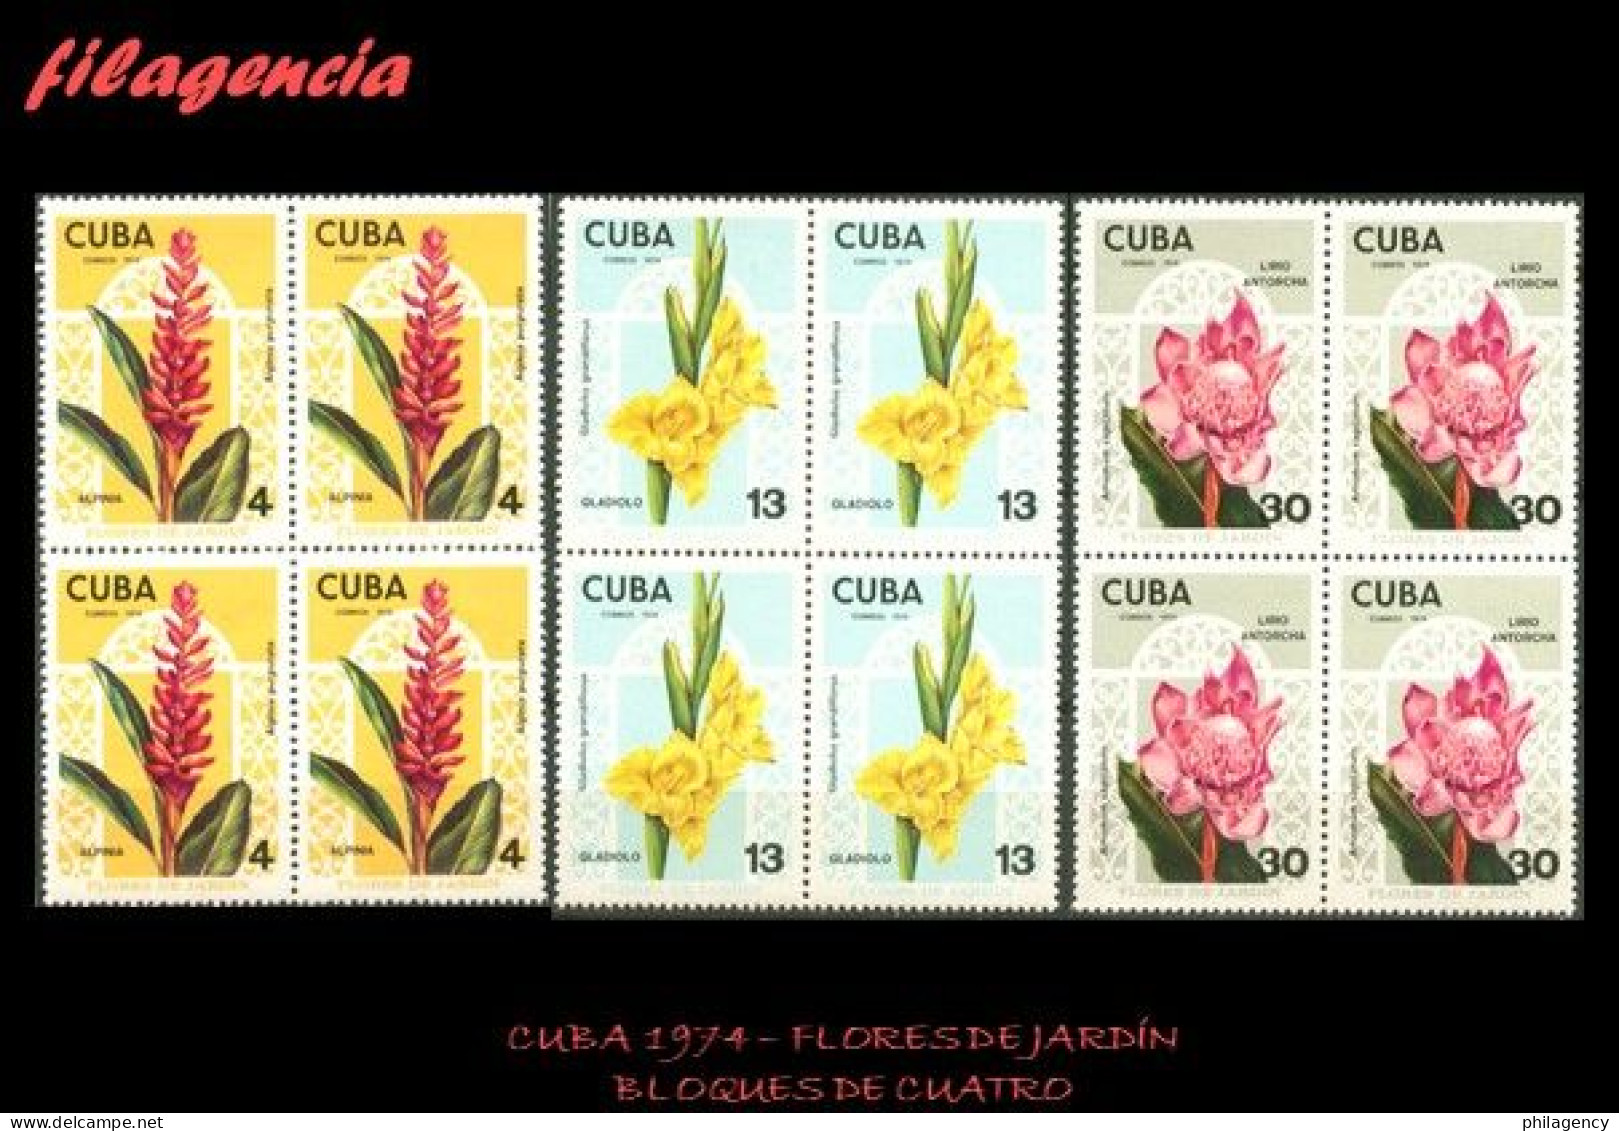 CUBA. BLOQUES DE CUATRO. 1974-16 FLORA. FLORES DE JARDÍN - Ungebraucht